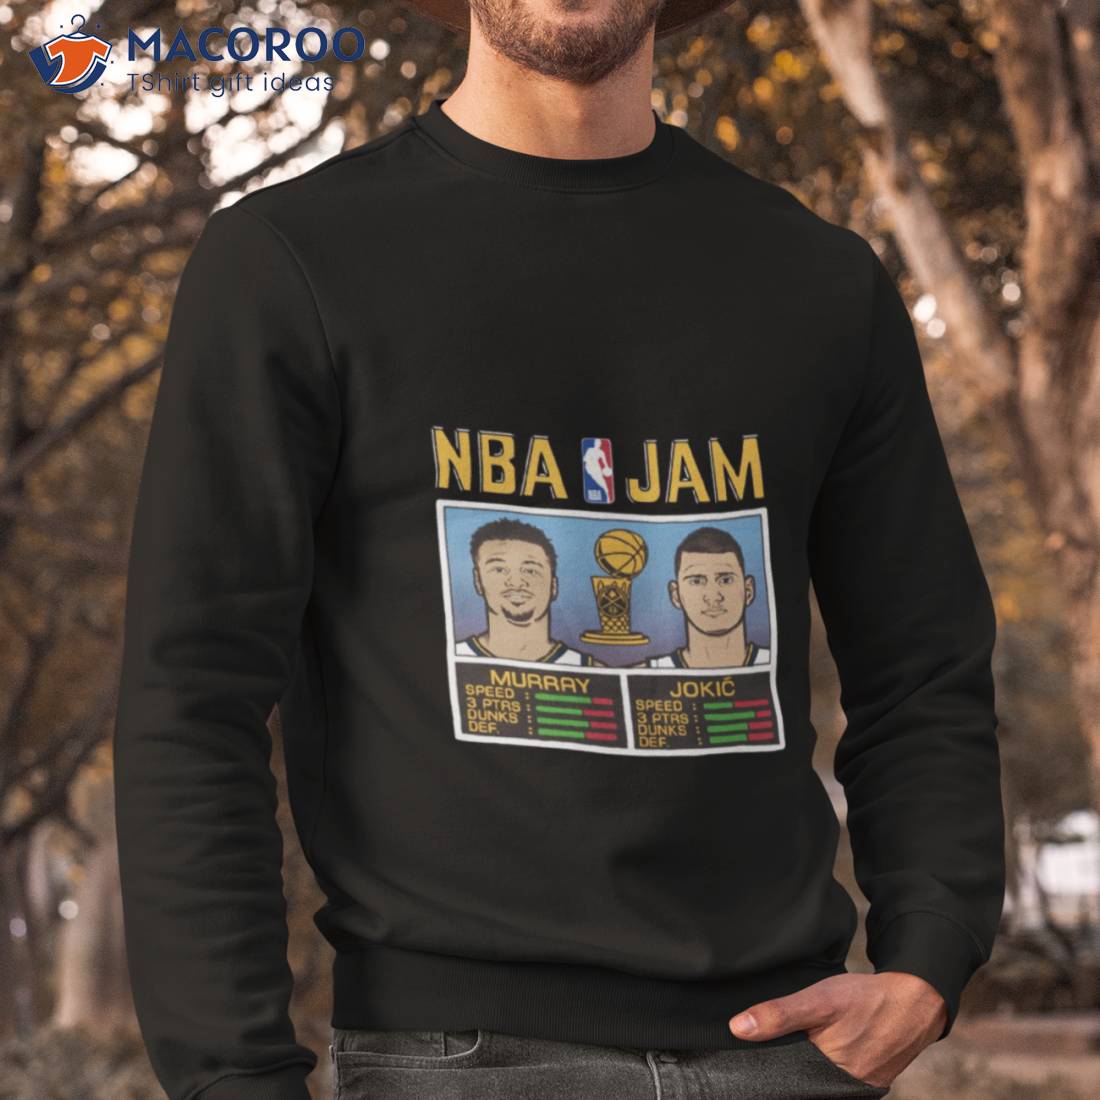 Vintage DenverNuggets Basketball Shirt, Nikola Jokic Shirt, Jamal